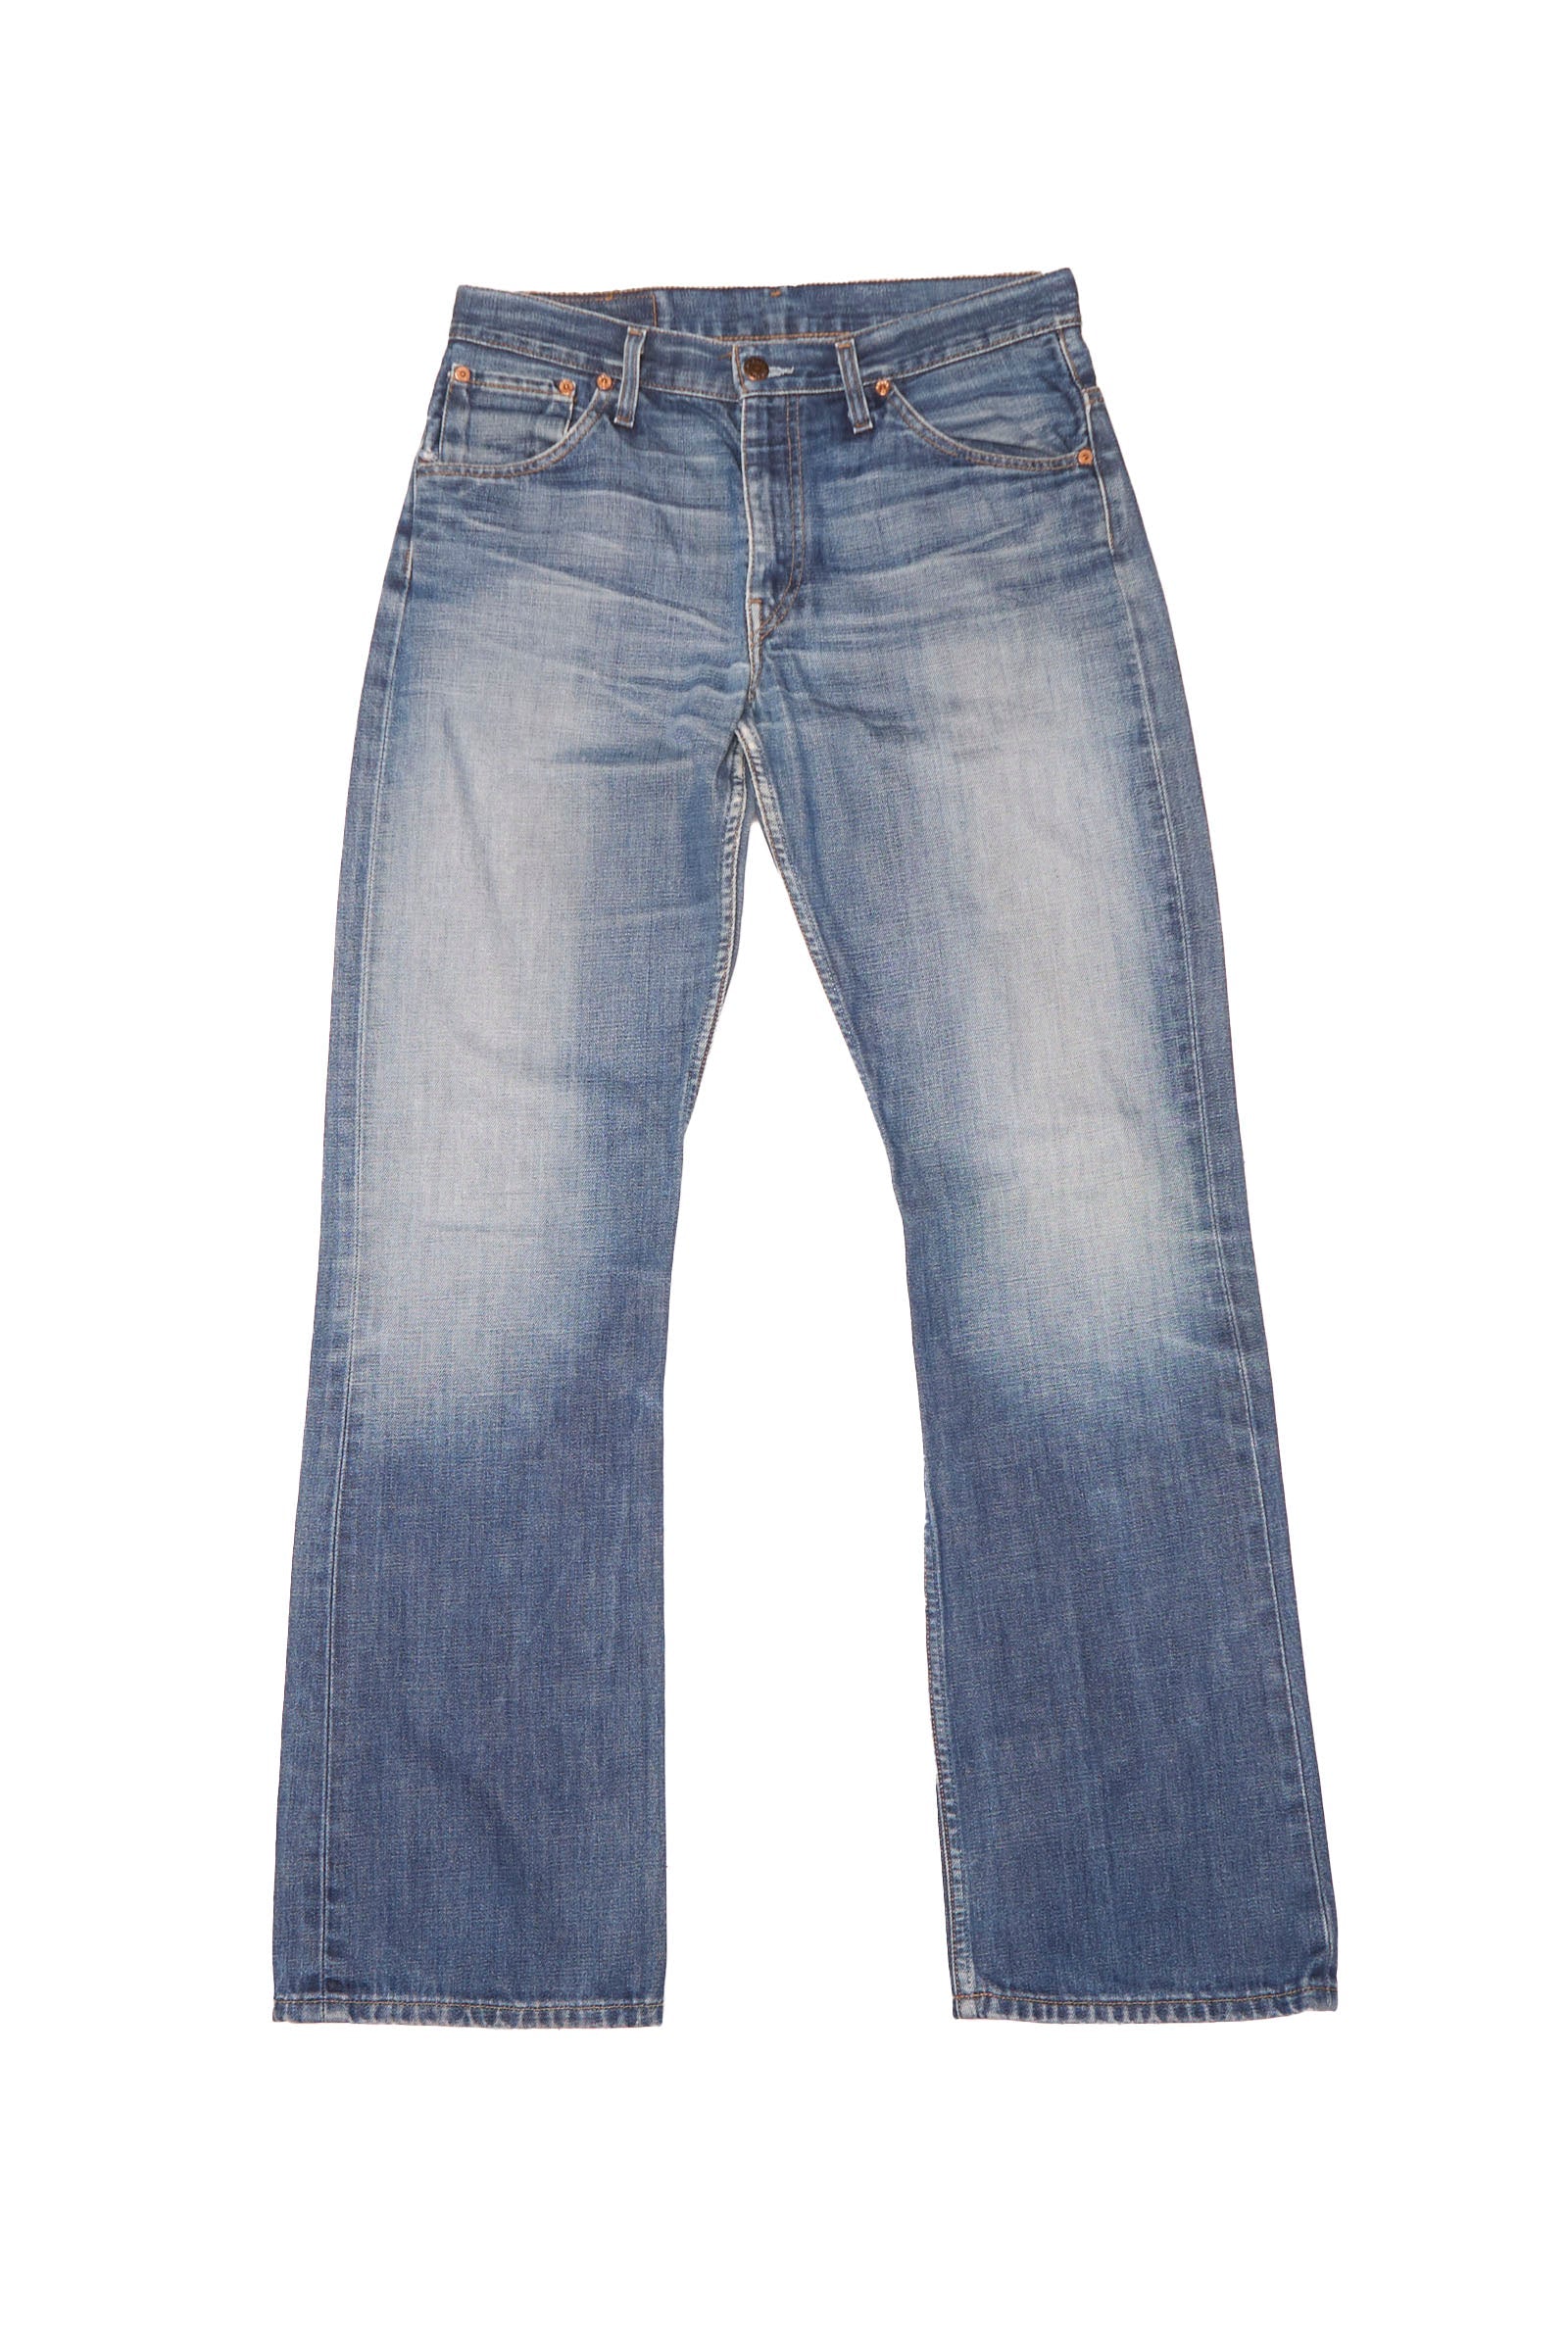 Zip Levis Straight cut Jeans - W32" L34"